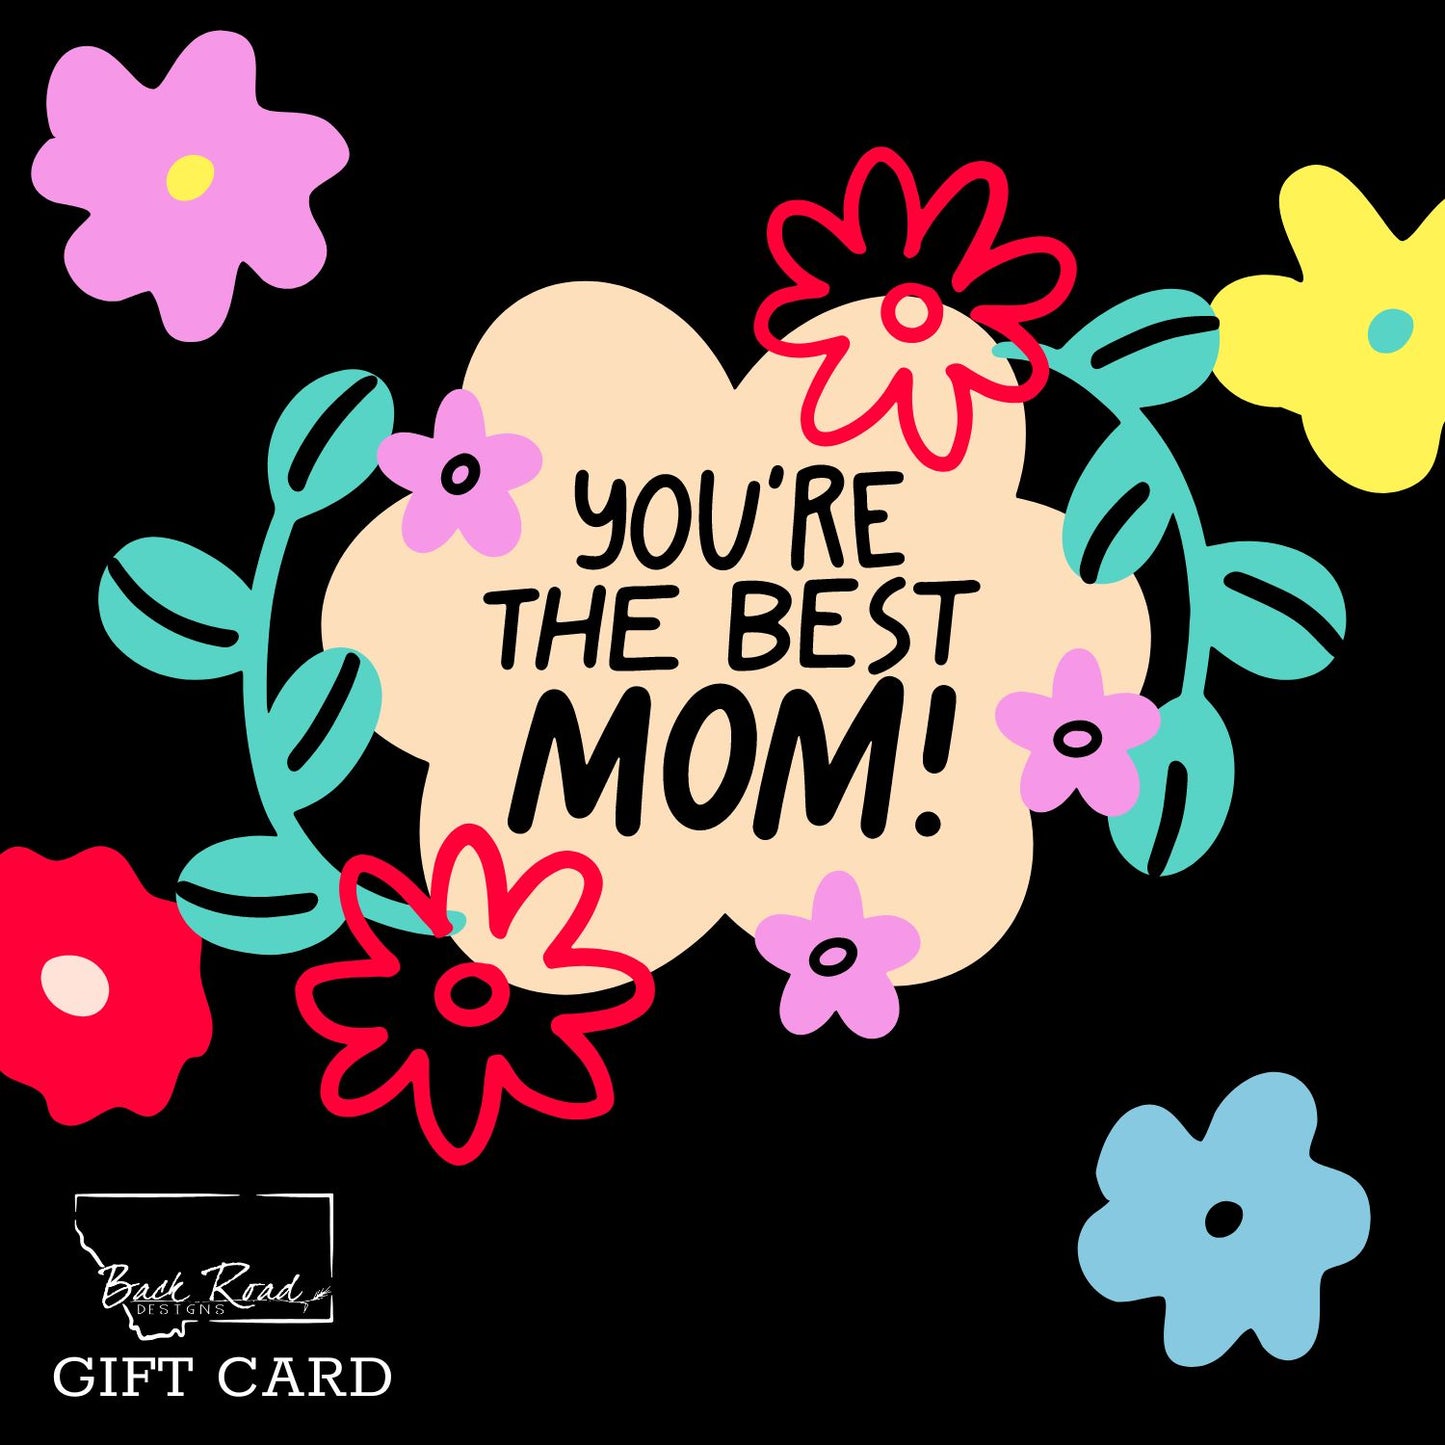 BACK ROAD DESIGNS 'BEST MOM' GIFT CARD